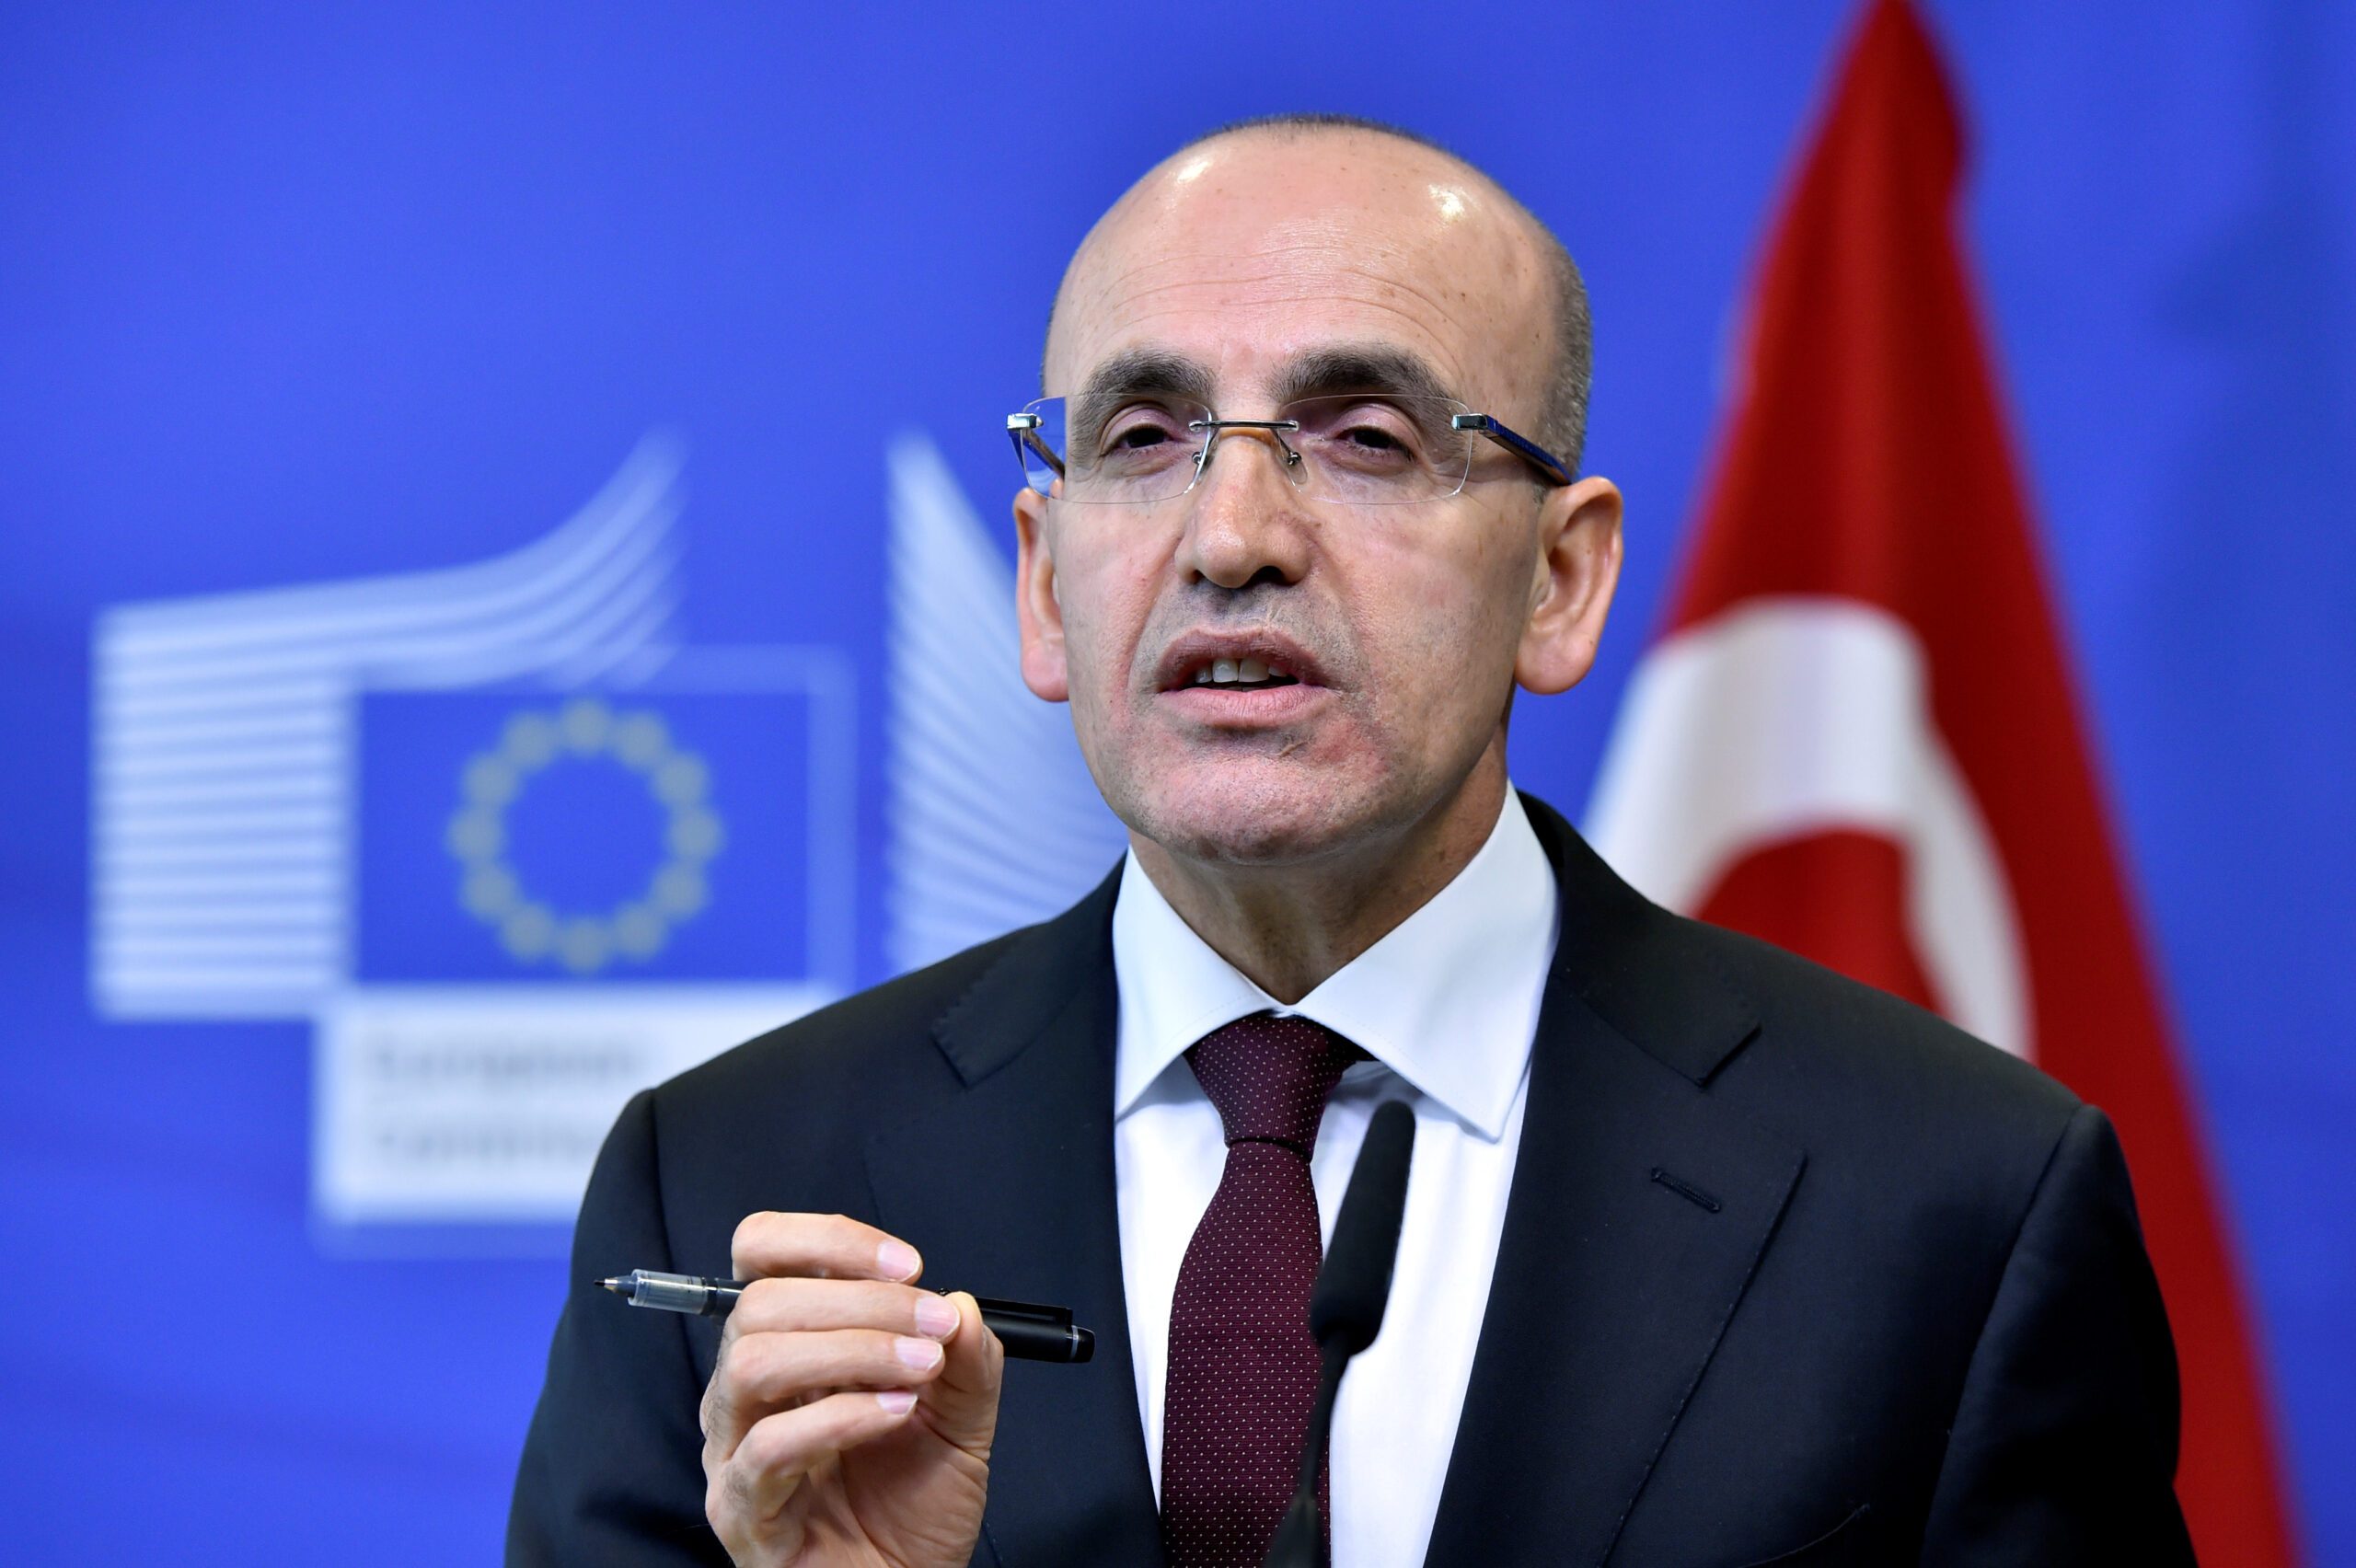 Monetary and fiscal tightening will help support disinflation, said Turkish finance minister Mehmet Şimşek